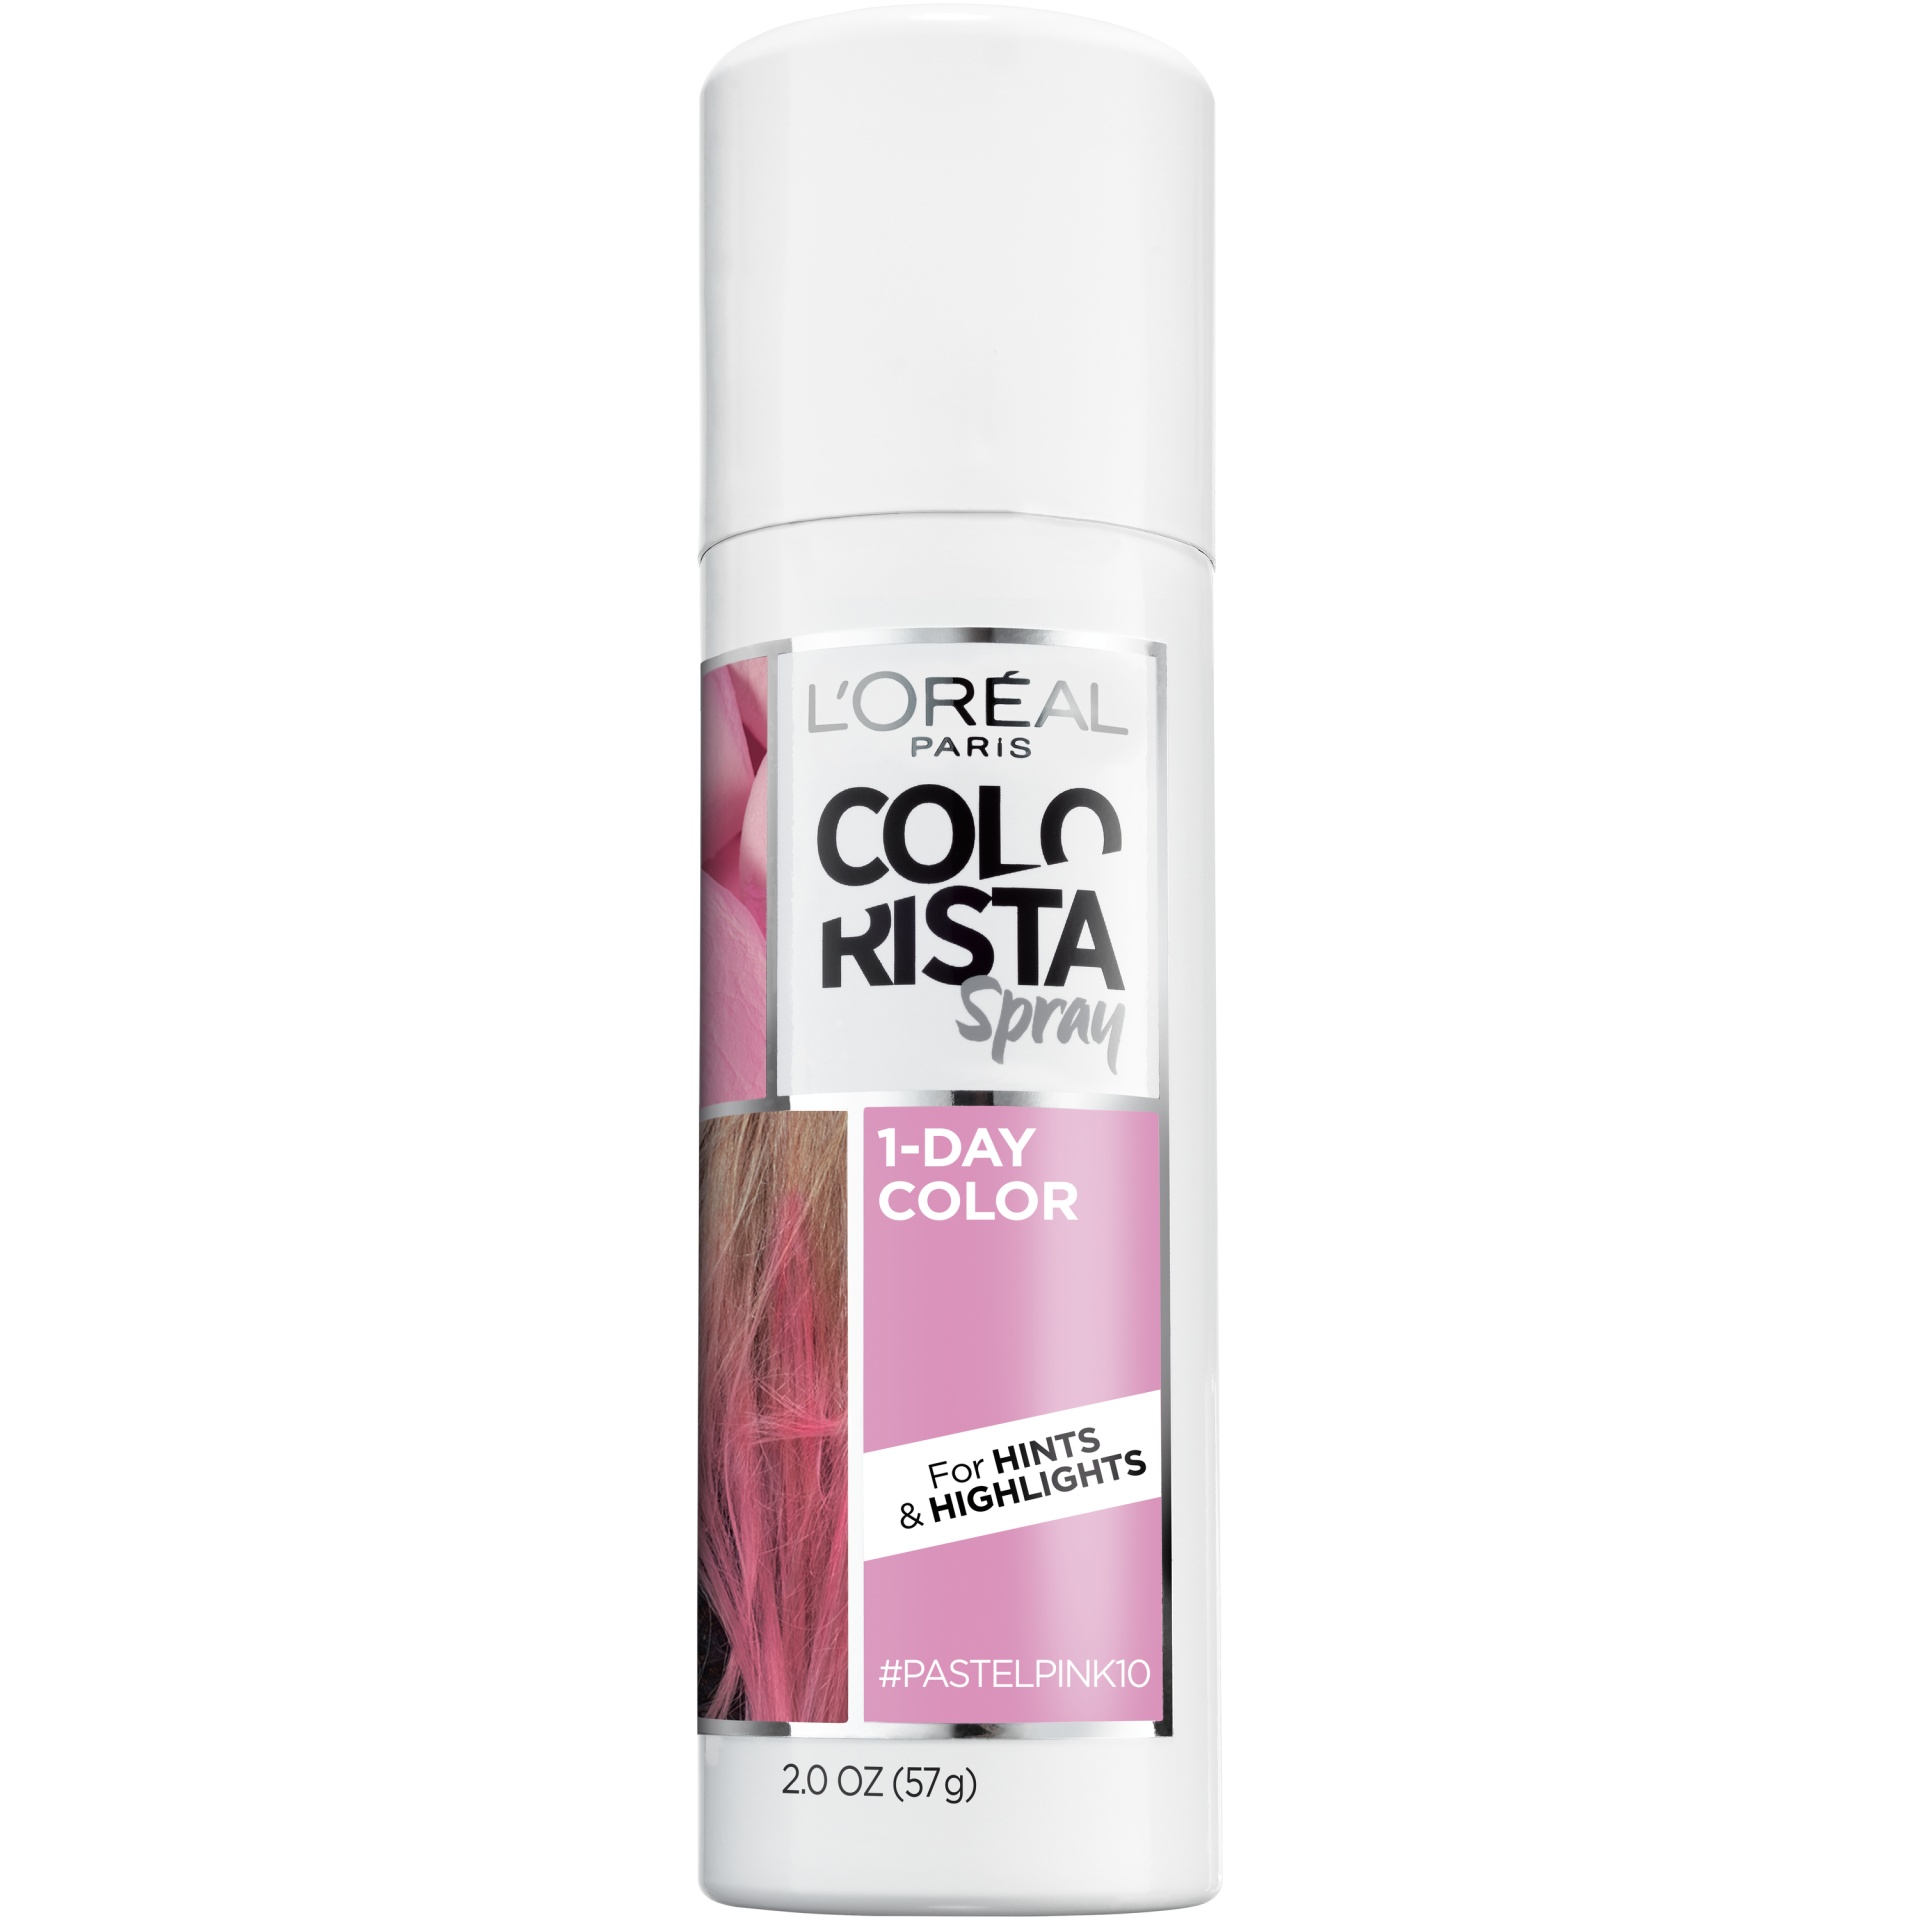 slide 2 of 5, L'Oréal Colo Rista Spray 1 Day Color #Pastelpink10, 2 oz